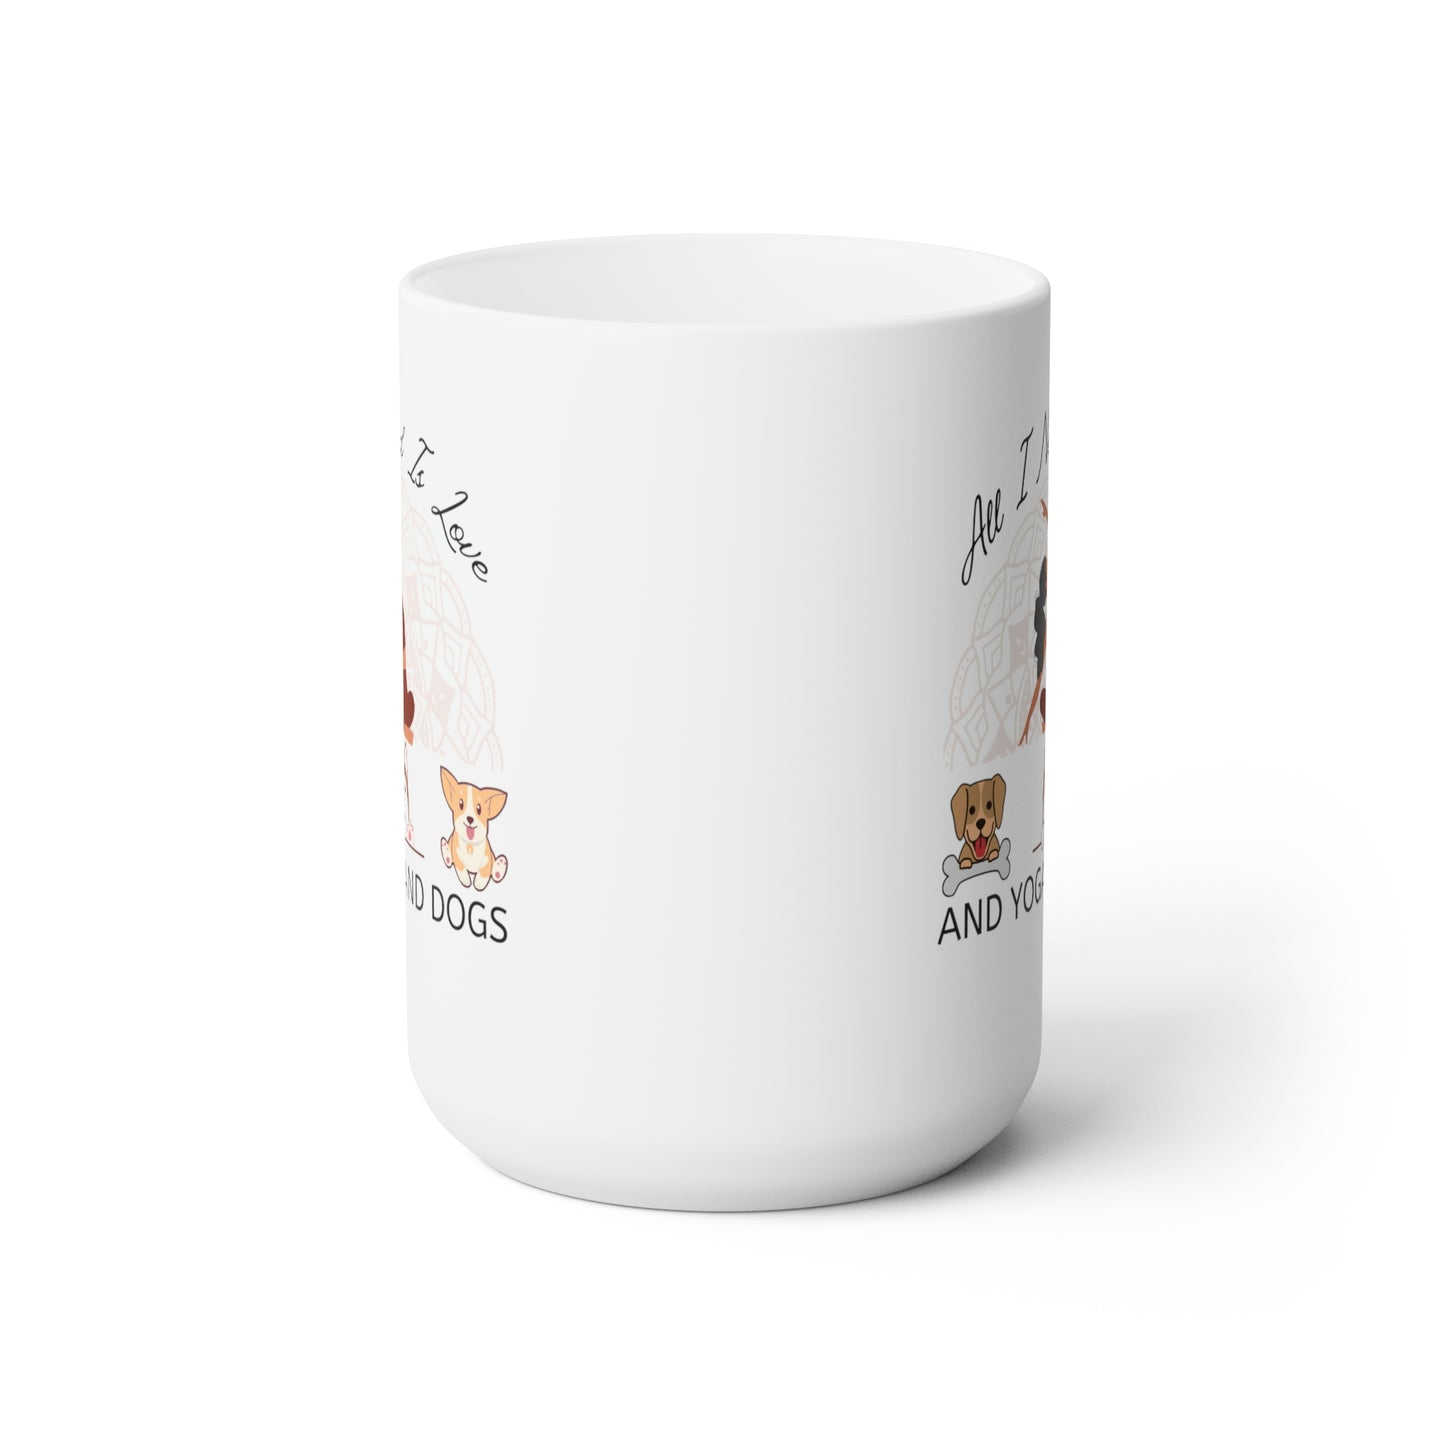 All I Need Is Love And Yoga And Dogs White Ceramic Mug 15oz | Happy Dog Mugs